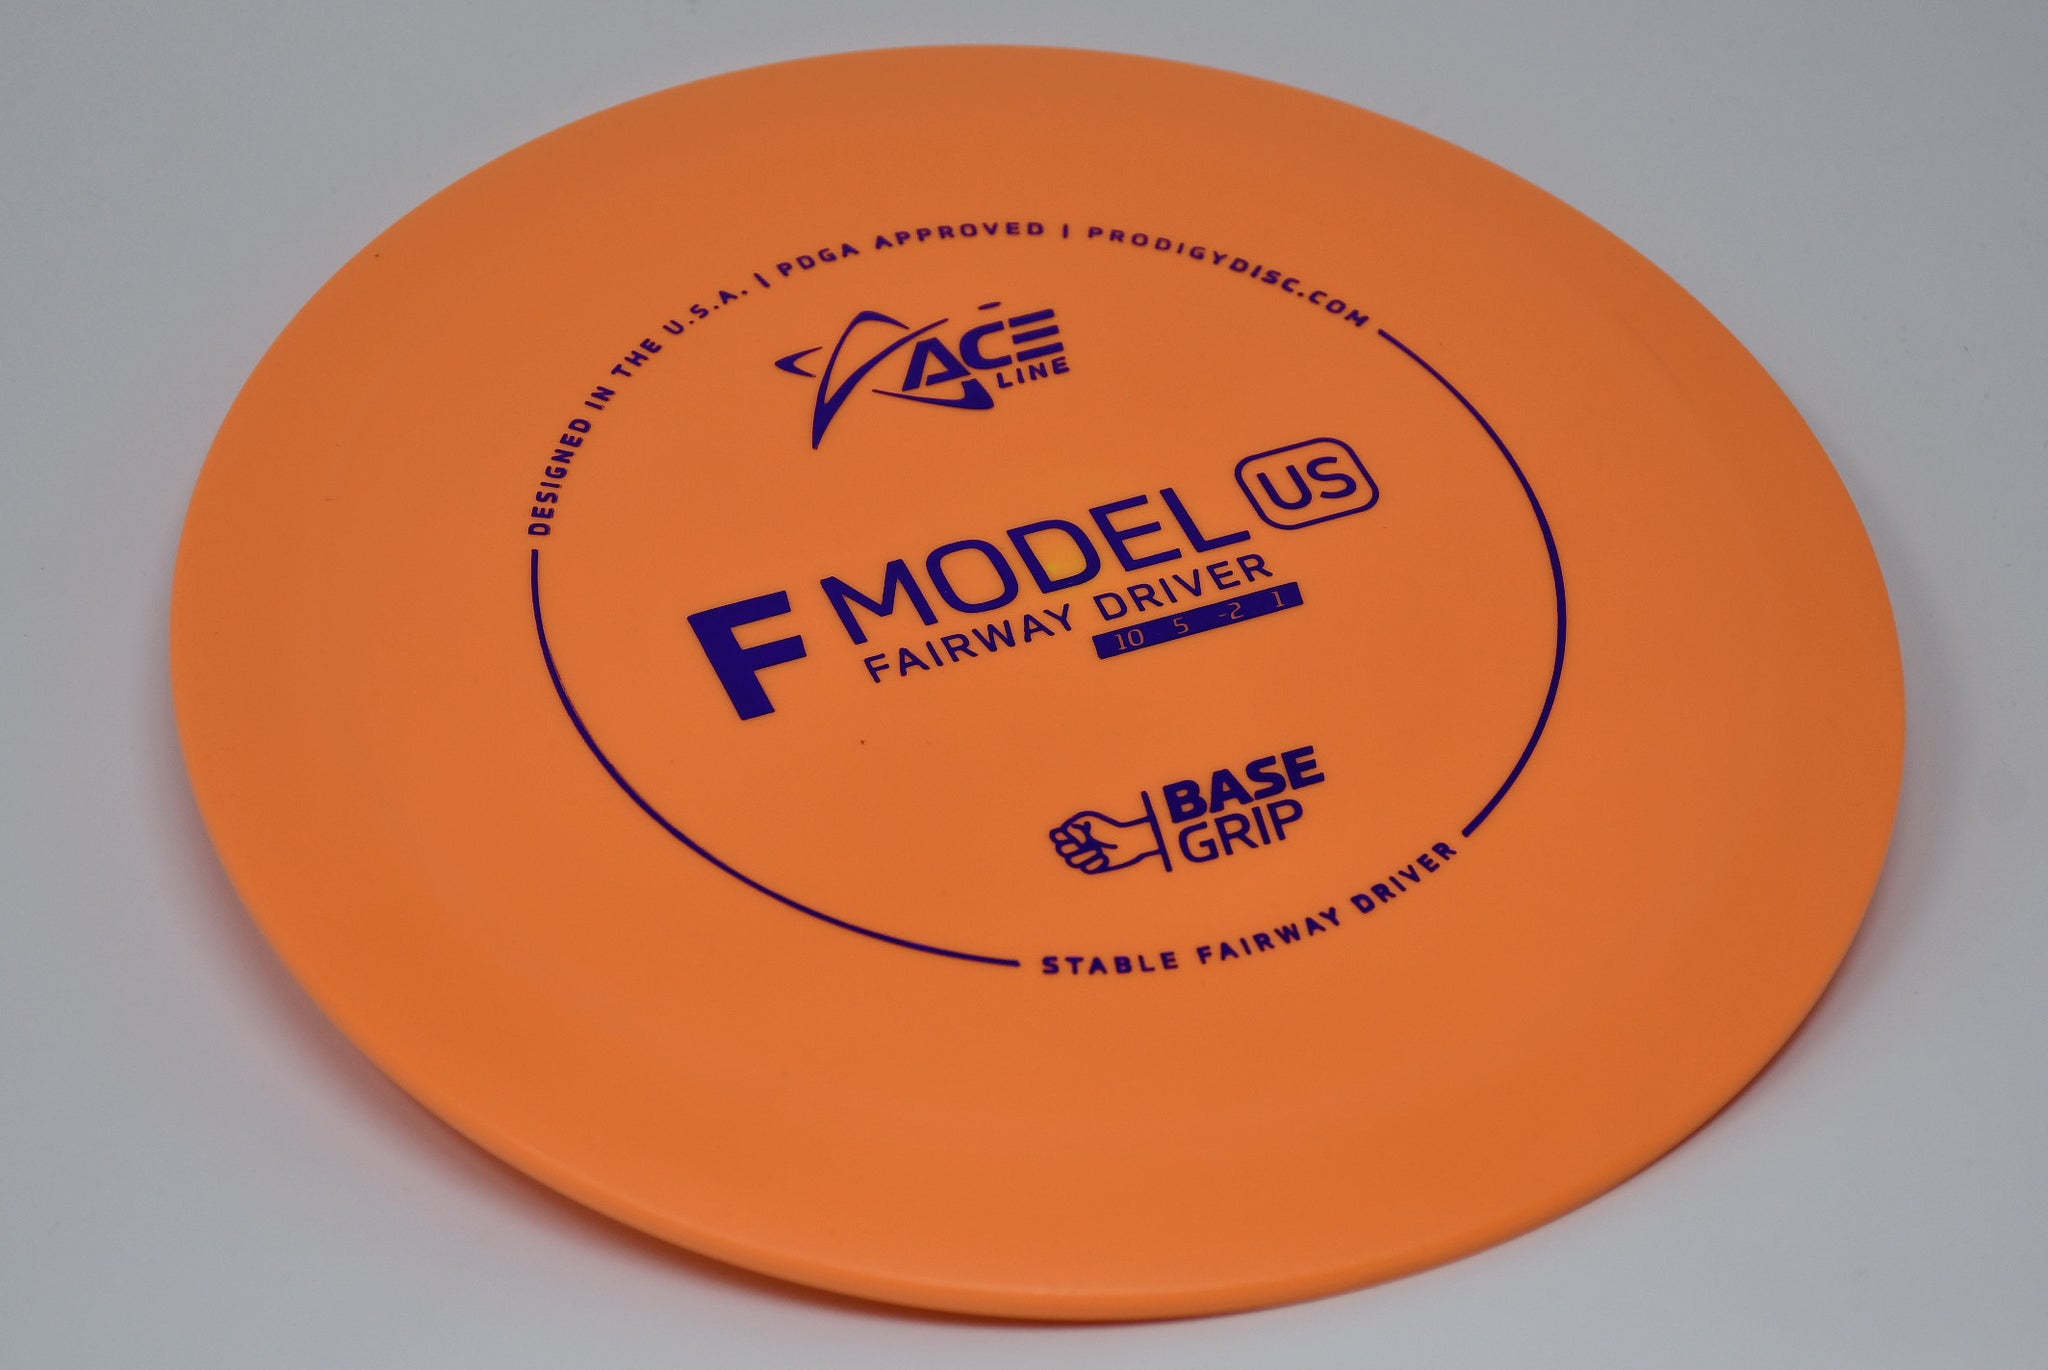 Prodigy Disc BaseGrip F Model US Fairway Driver Disc Golf Disc